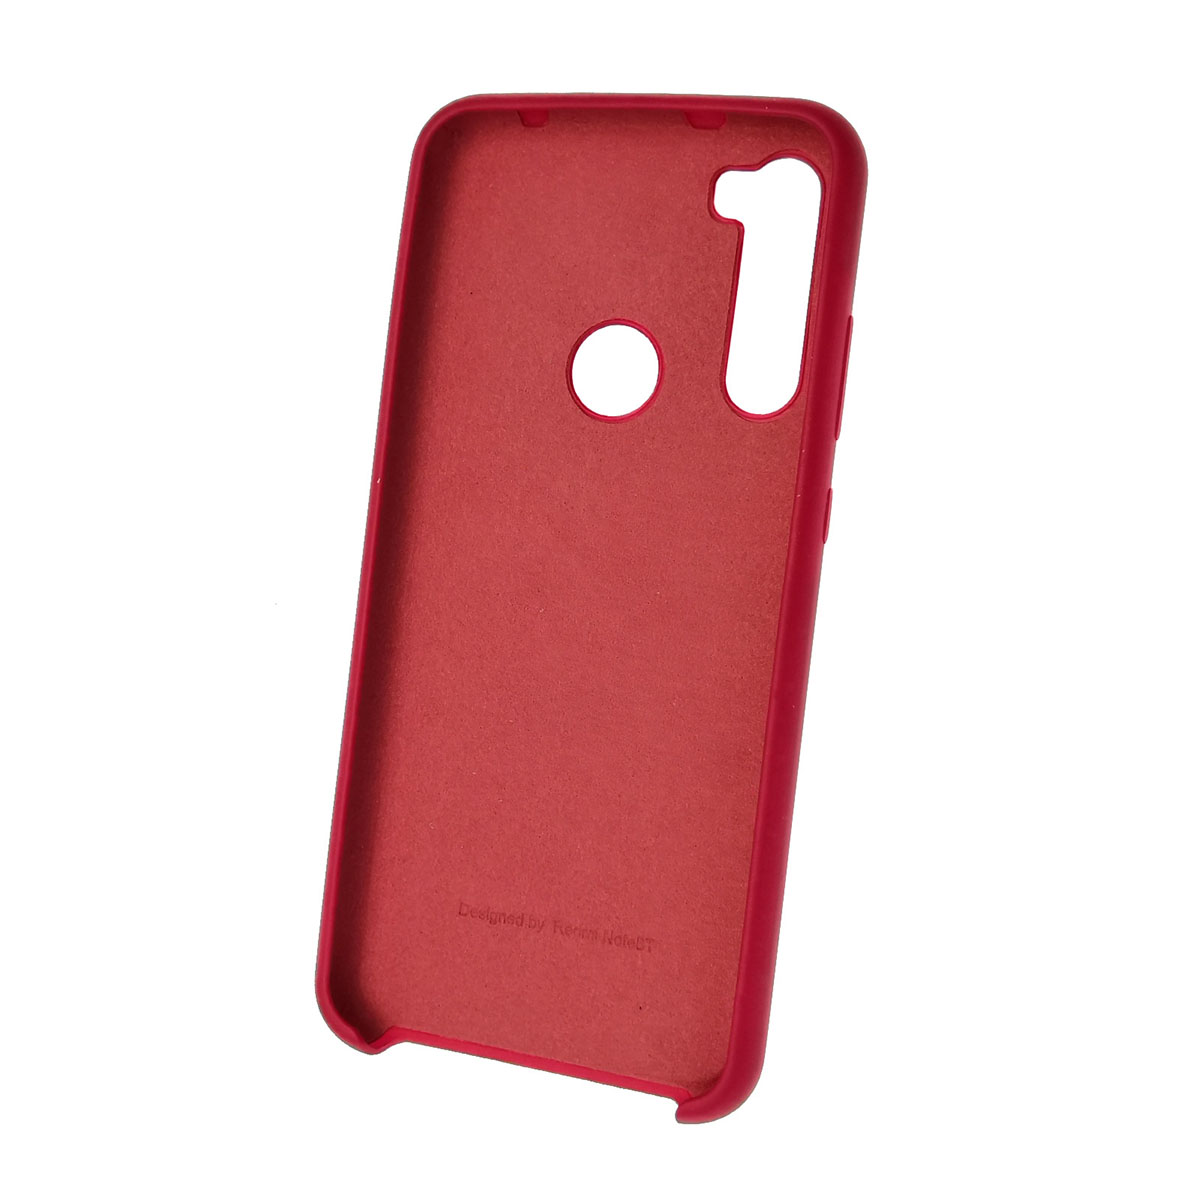 Чехол накладка Silicon Cover для XIAOMI Redmi Note 8T, силикон, бархат, цвет красная роза.